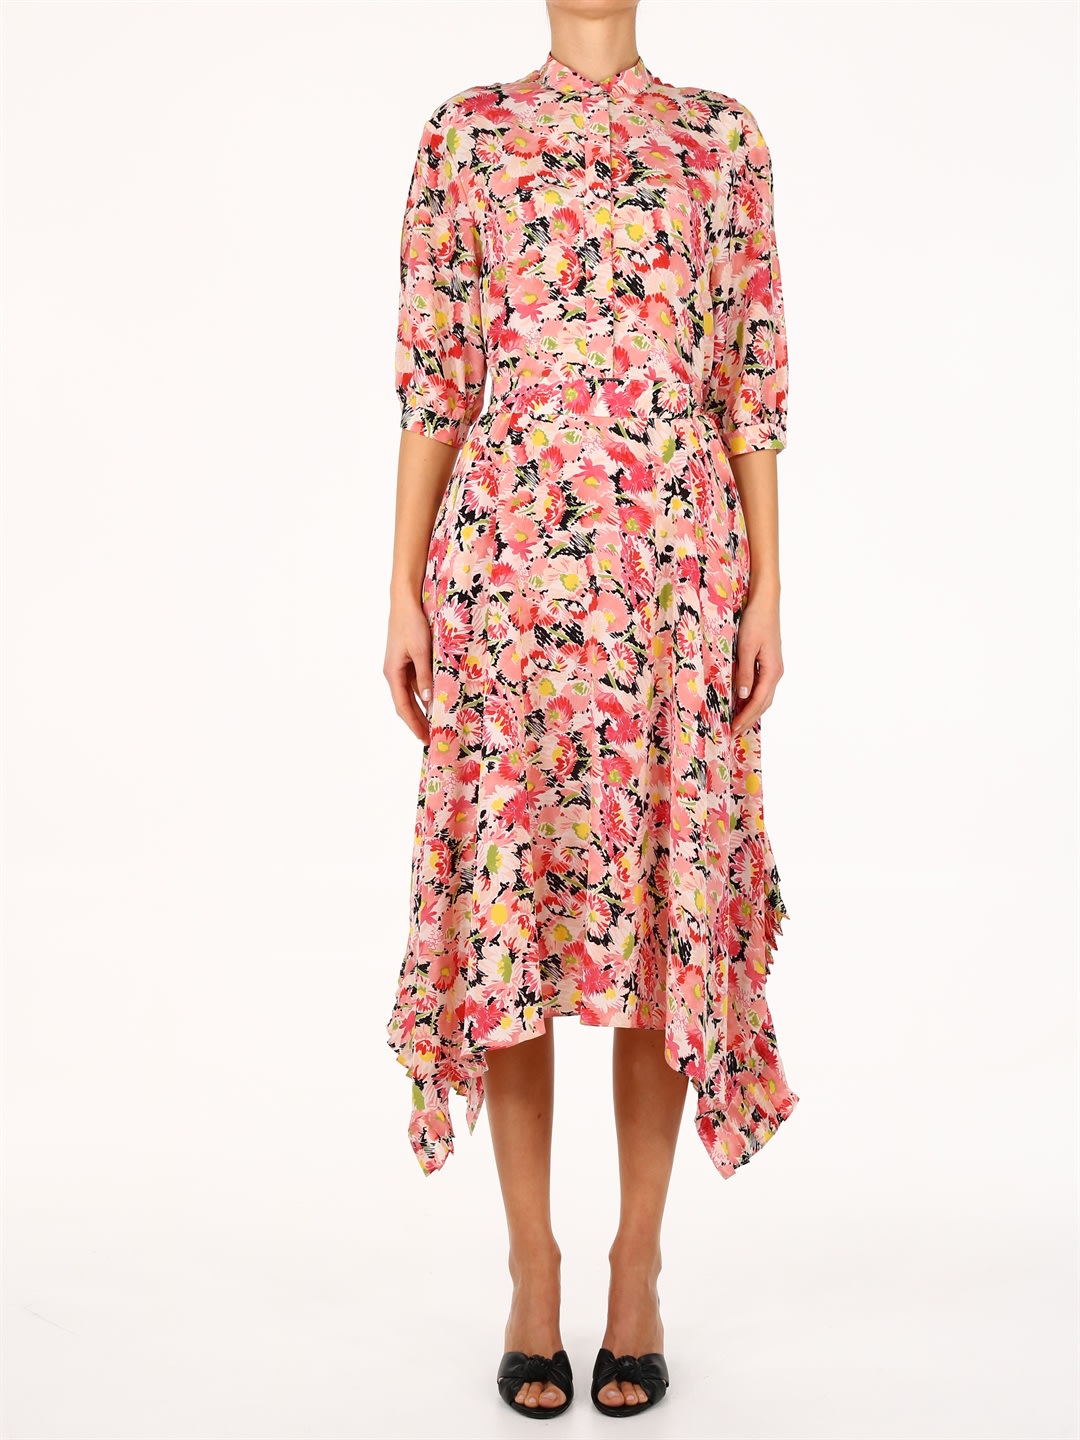 Stella McCartney Floral Silk Dress